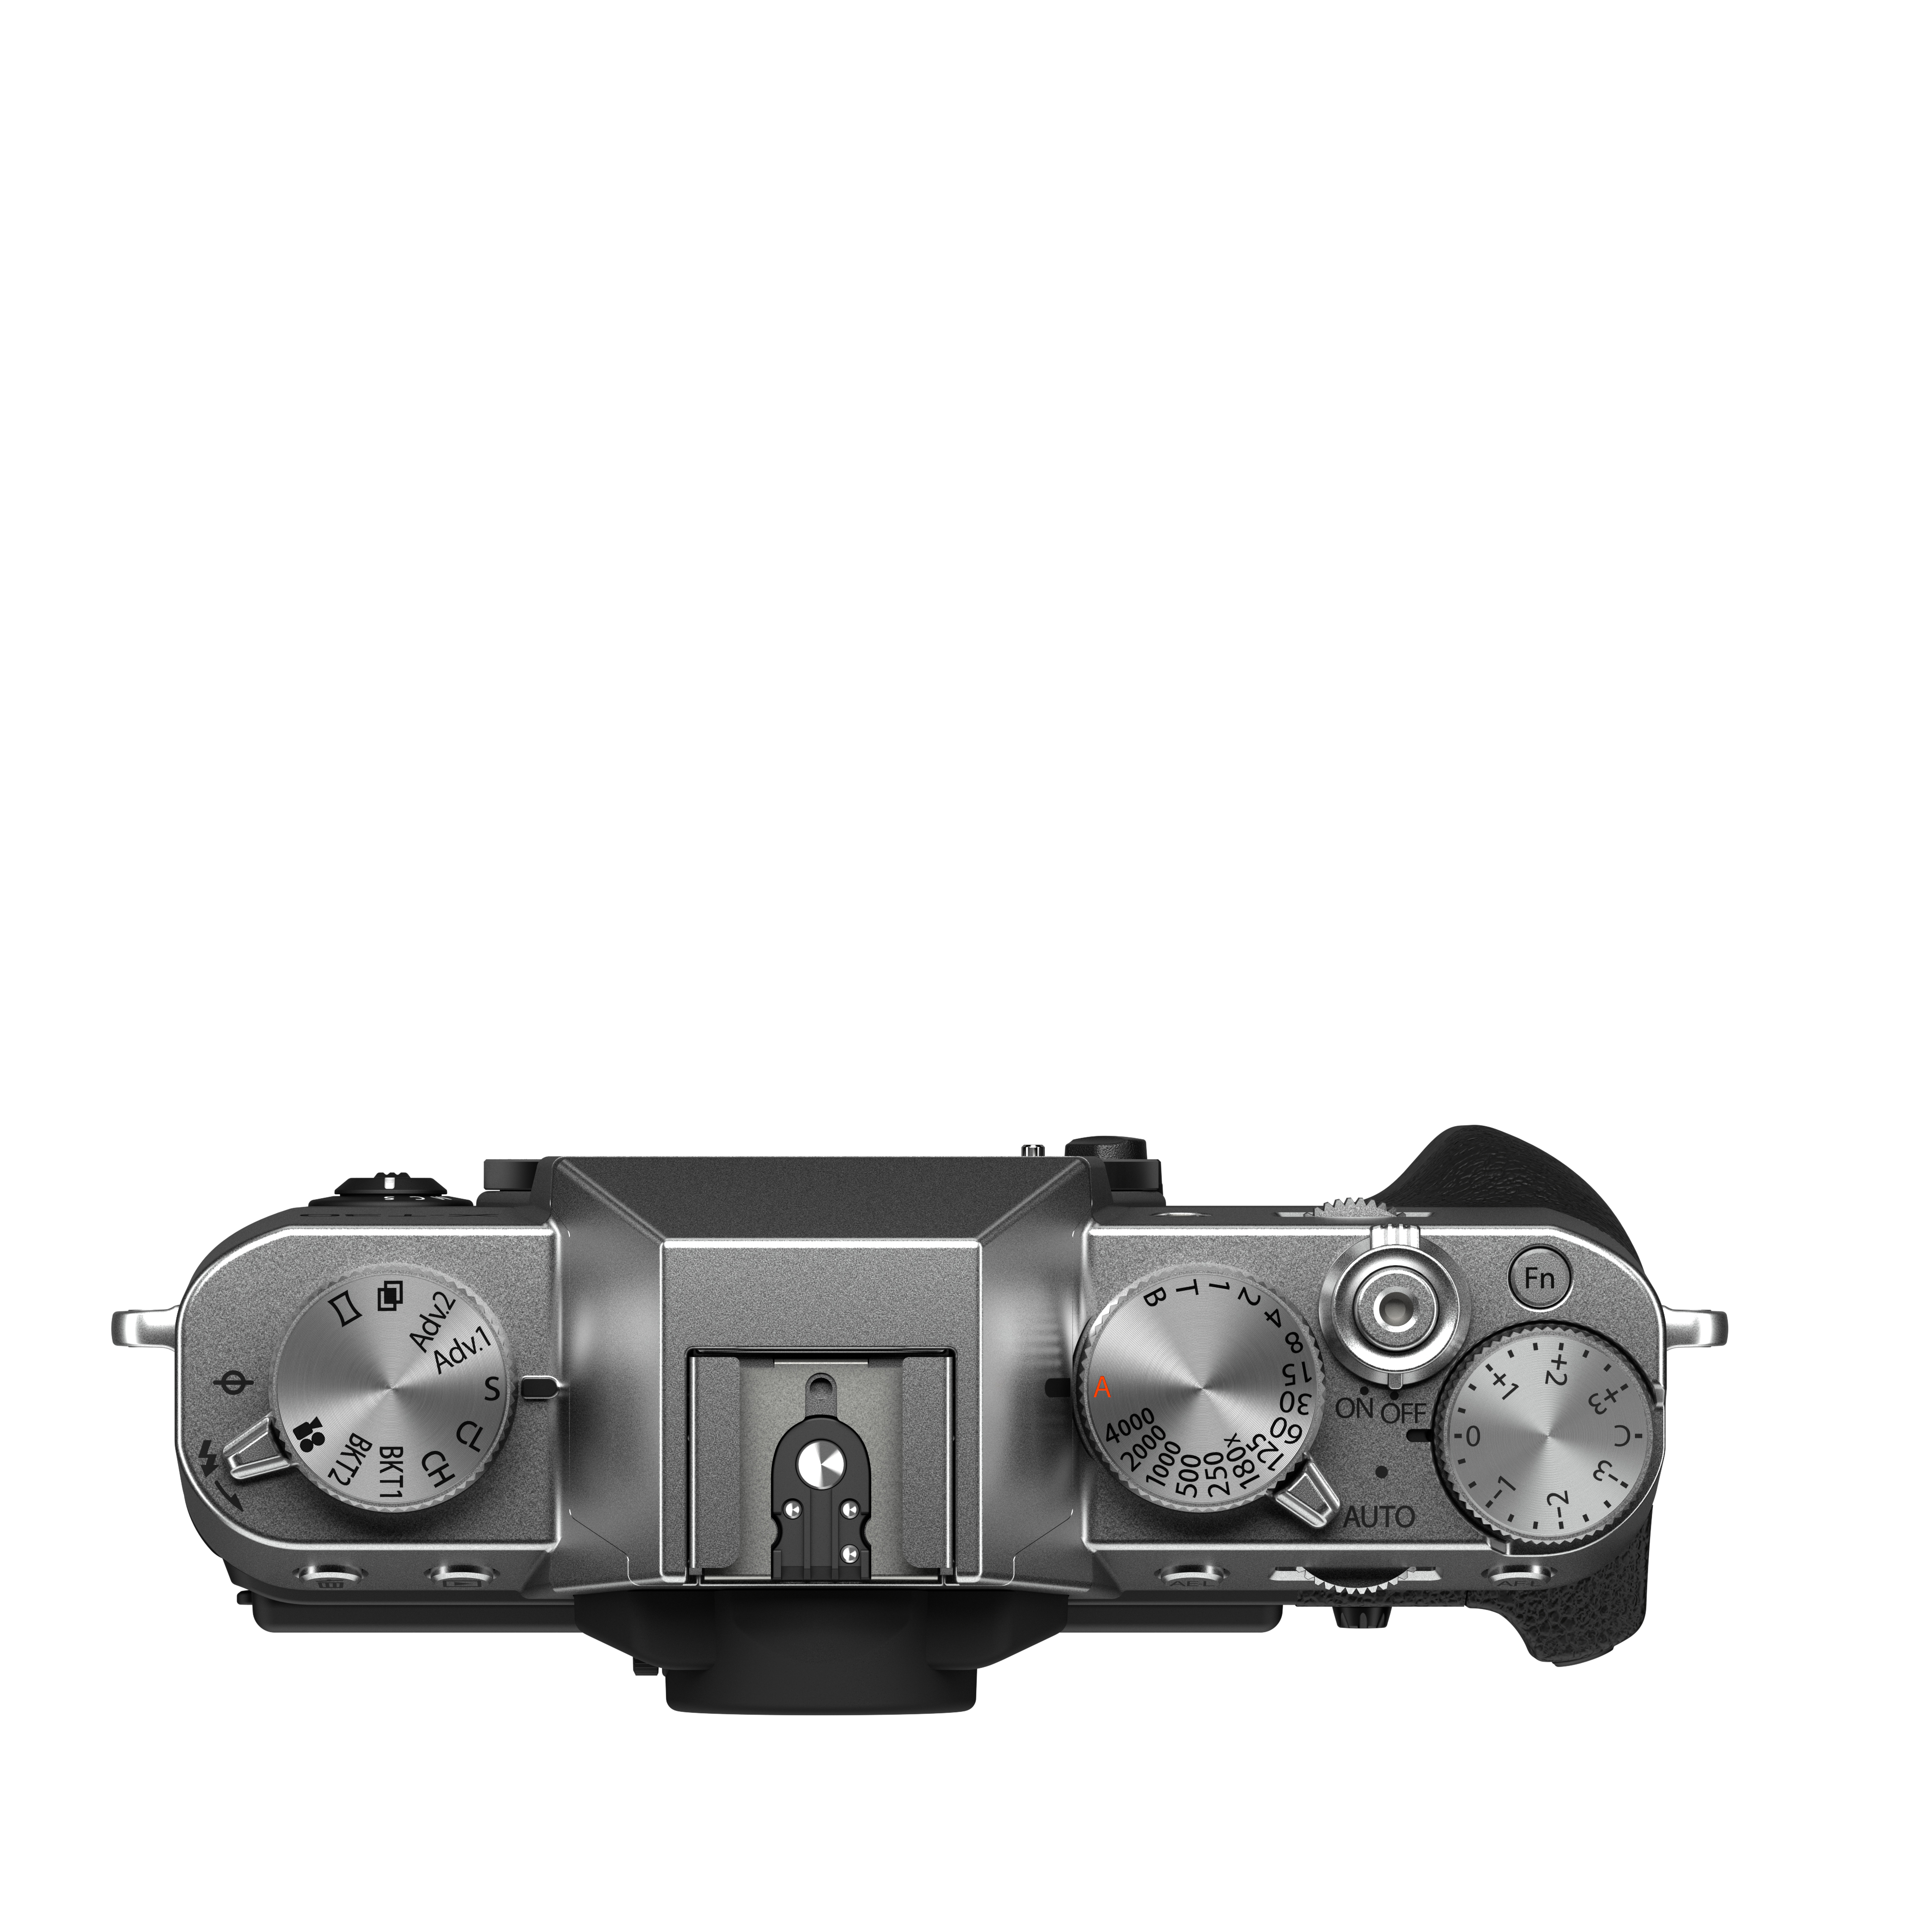 Fujifilm X-T30 II silber Gehäuse